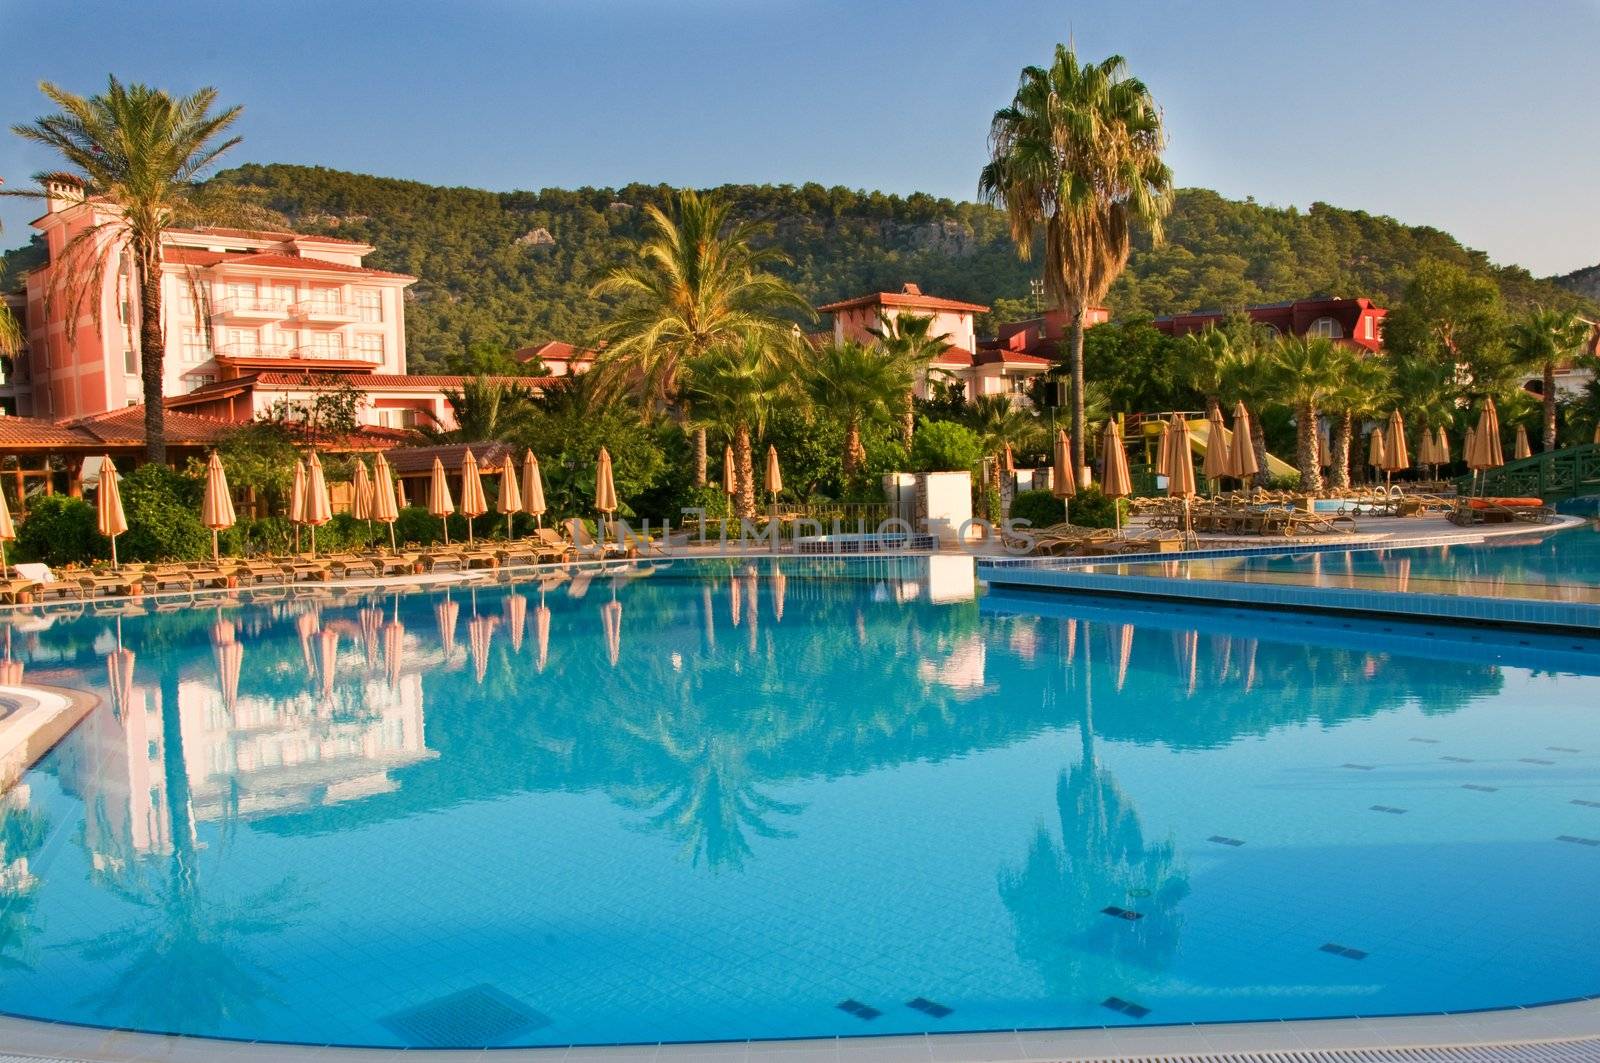 Pool with turquoise water near a hotel by iryna_rasko